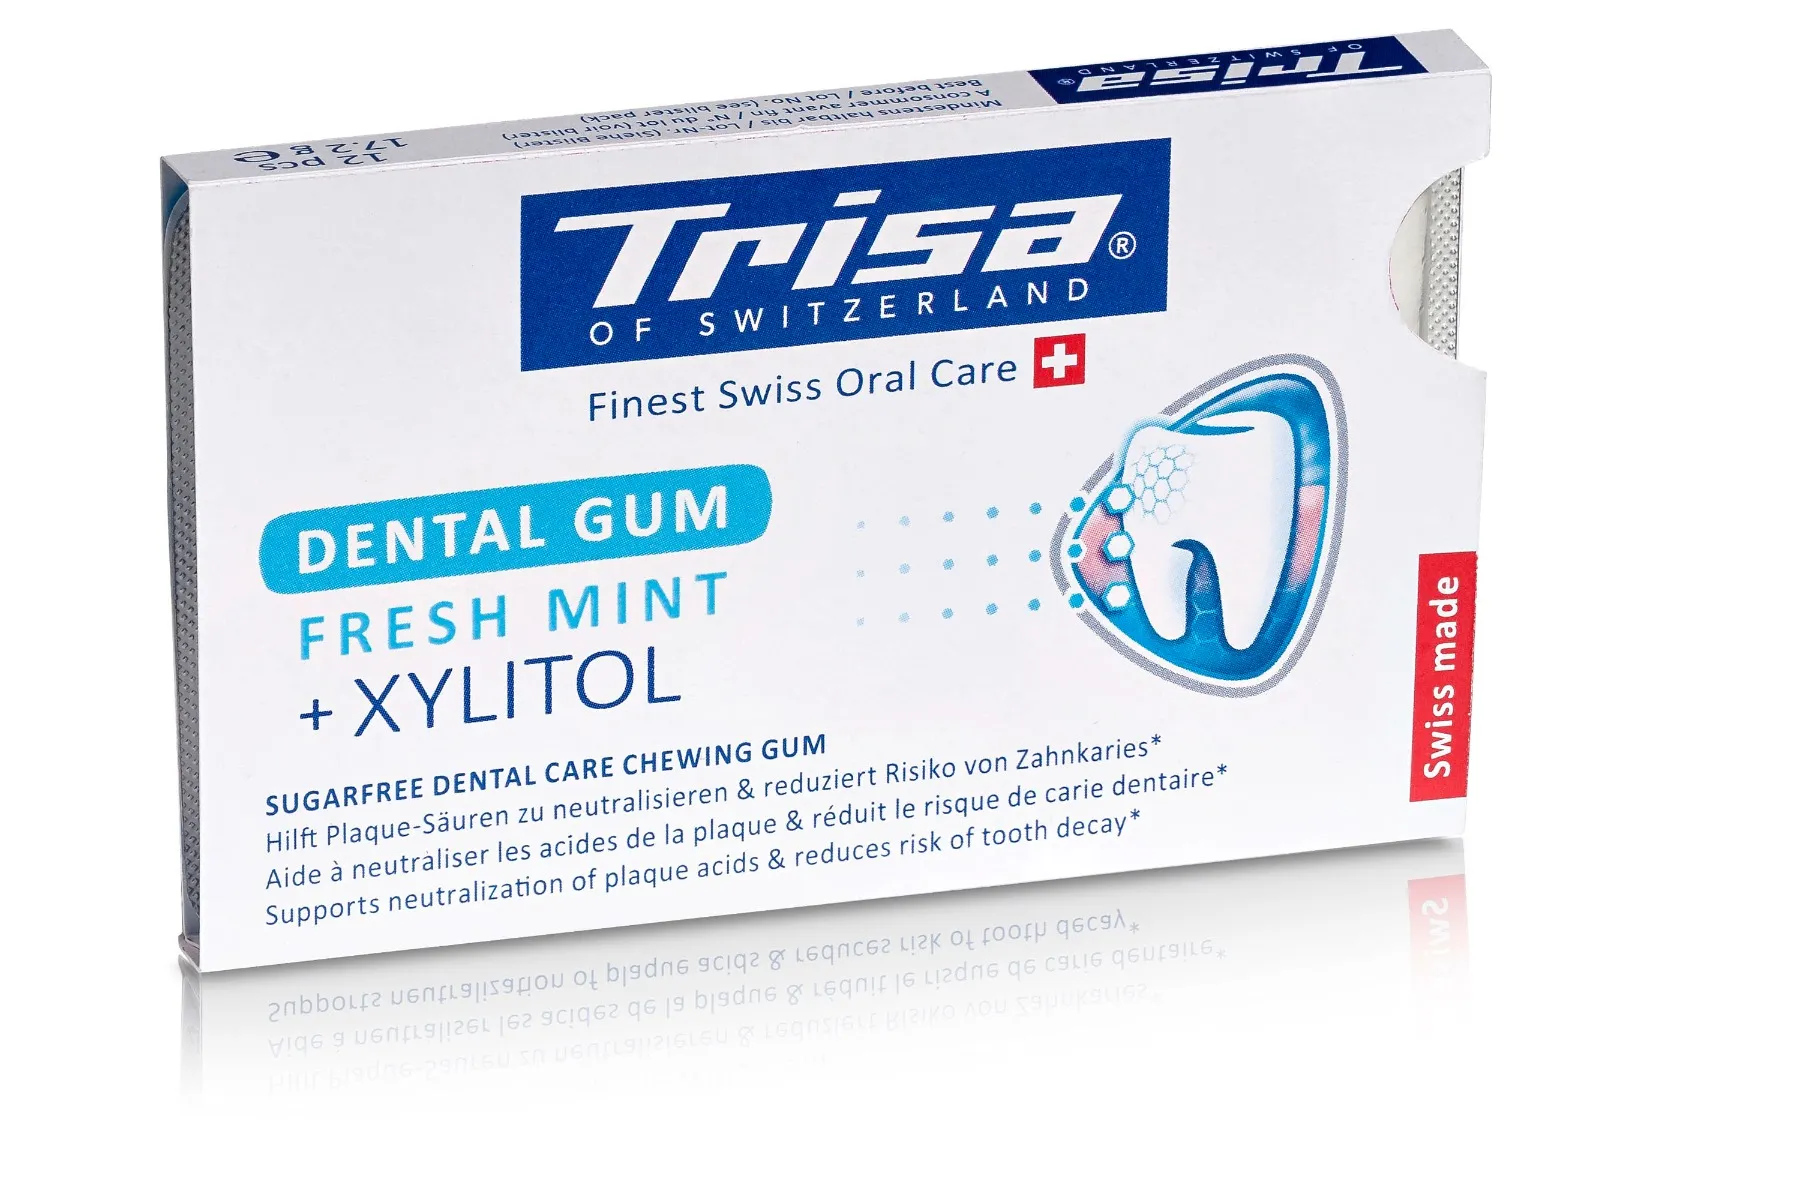 Guma dentara profesionala cu xylitol Dental Gum, 12 bucati, Trisa